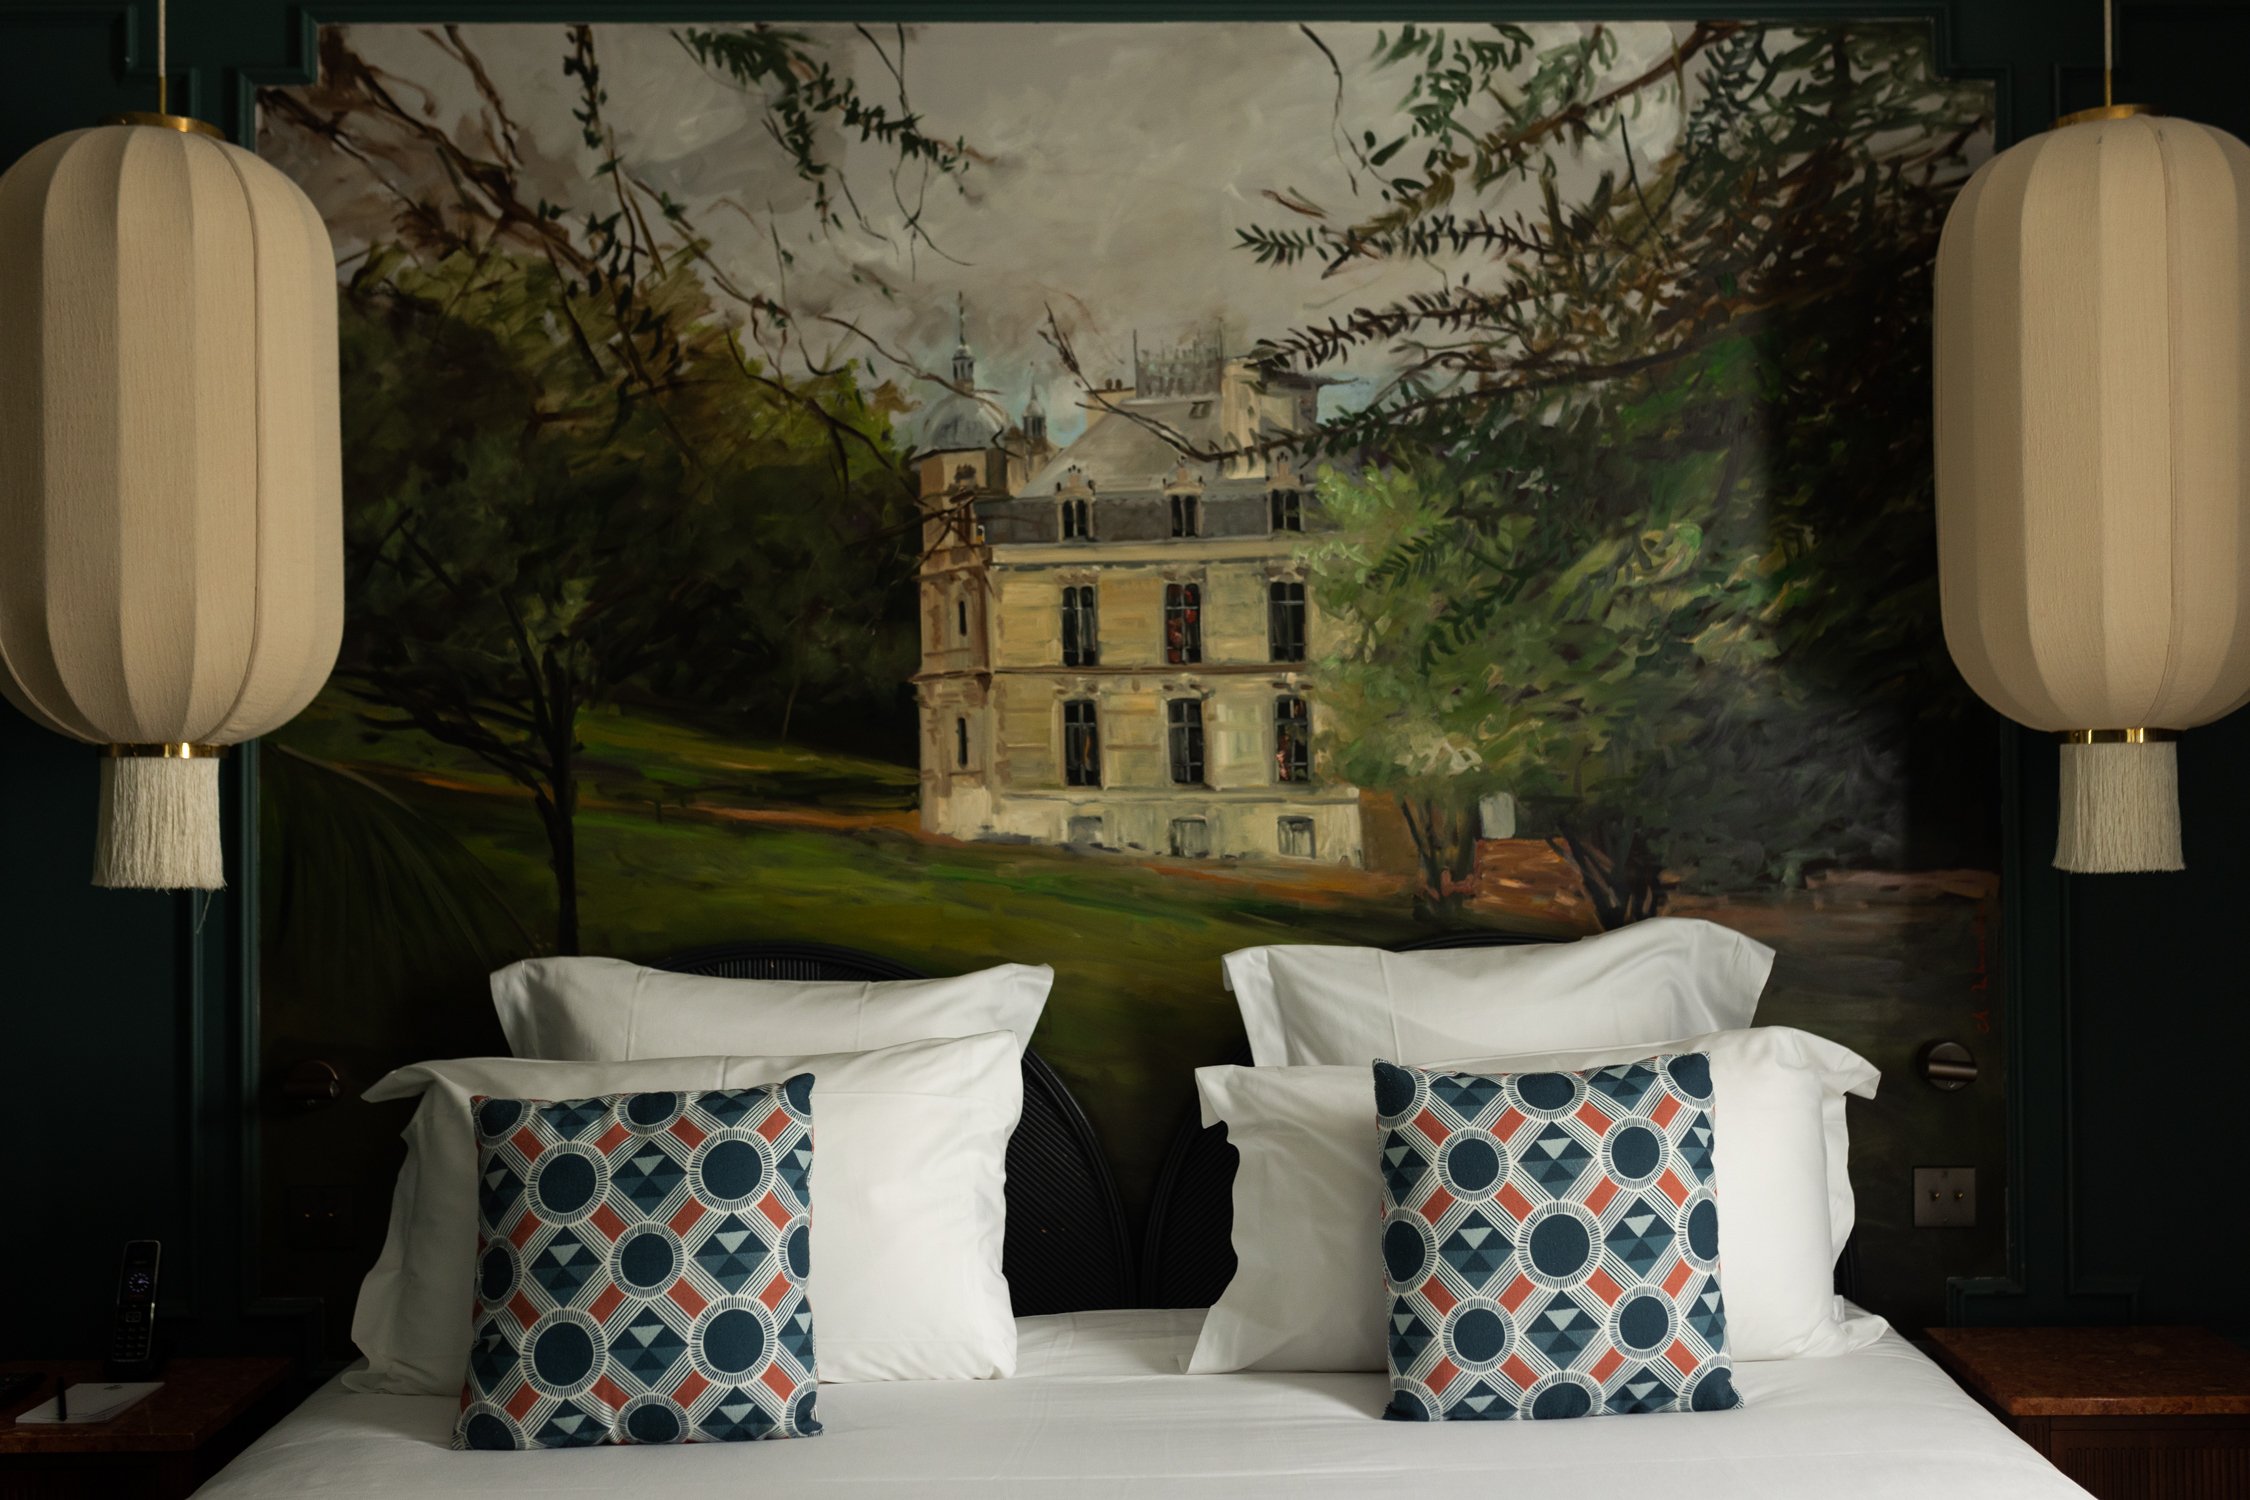 Hotel Monte Cristo in Paris, an homage to Alexandre Dumas-090.jpg